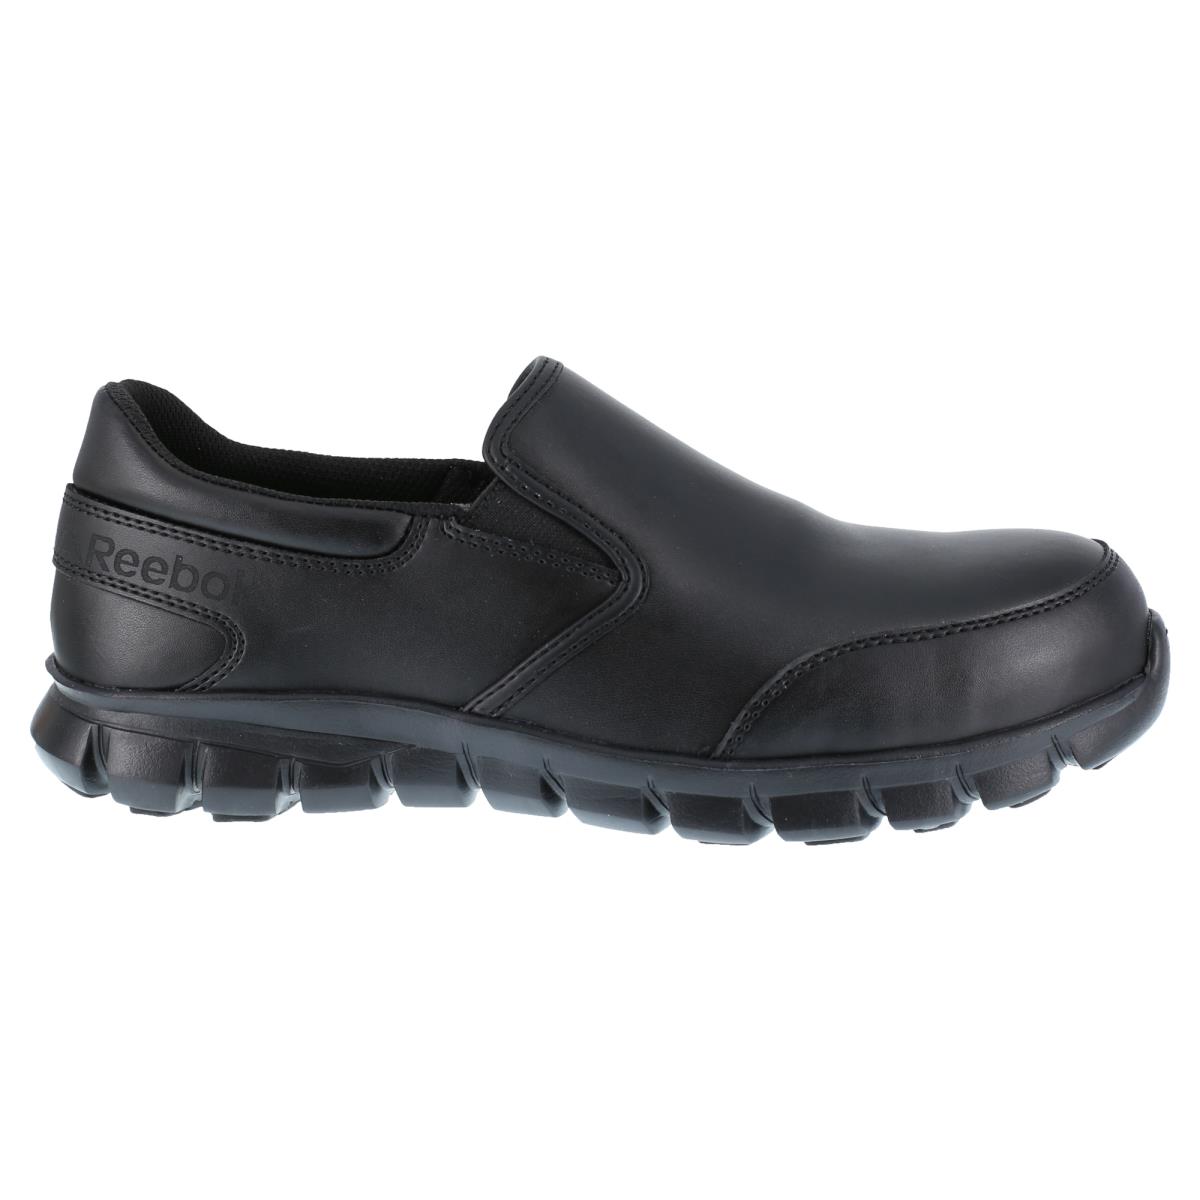 Reebok Womens Black Leather Work Shoes Sublite Slip-on CT M